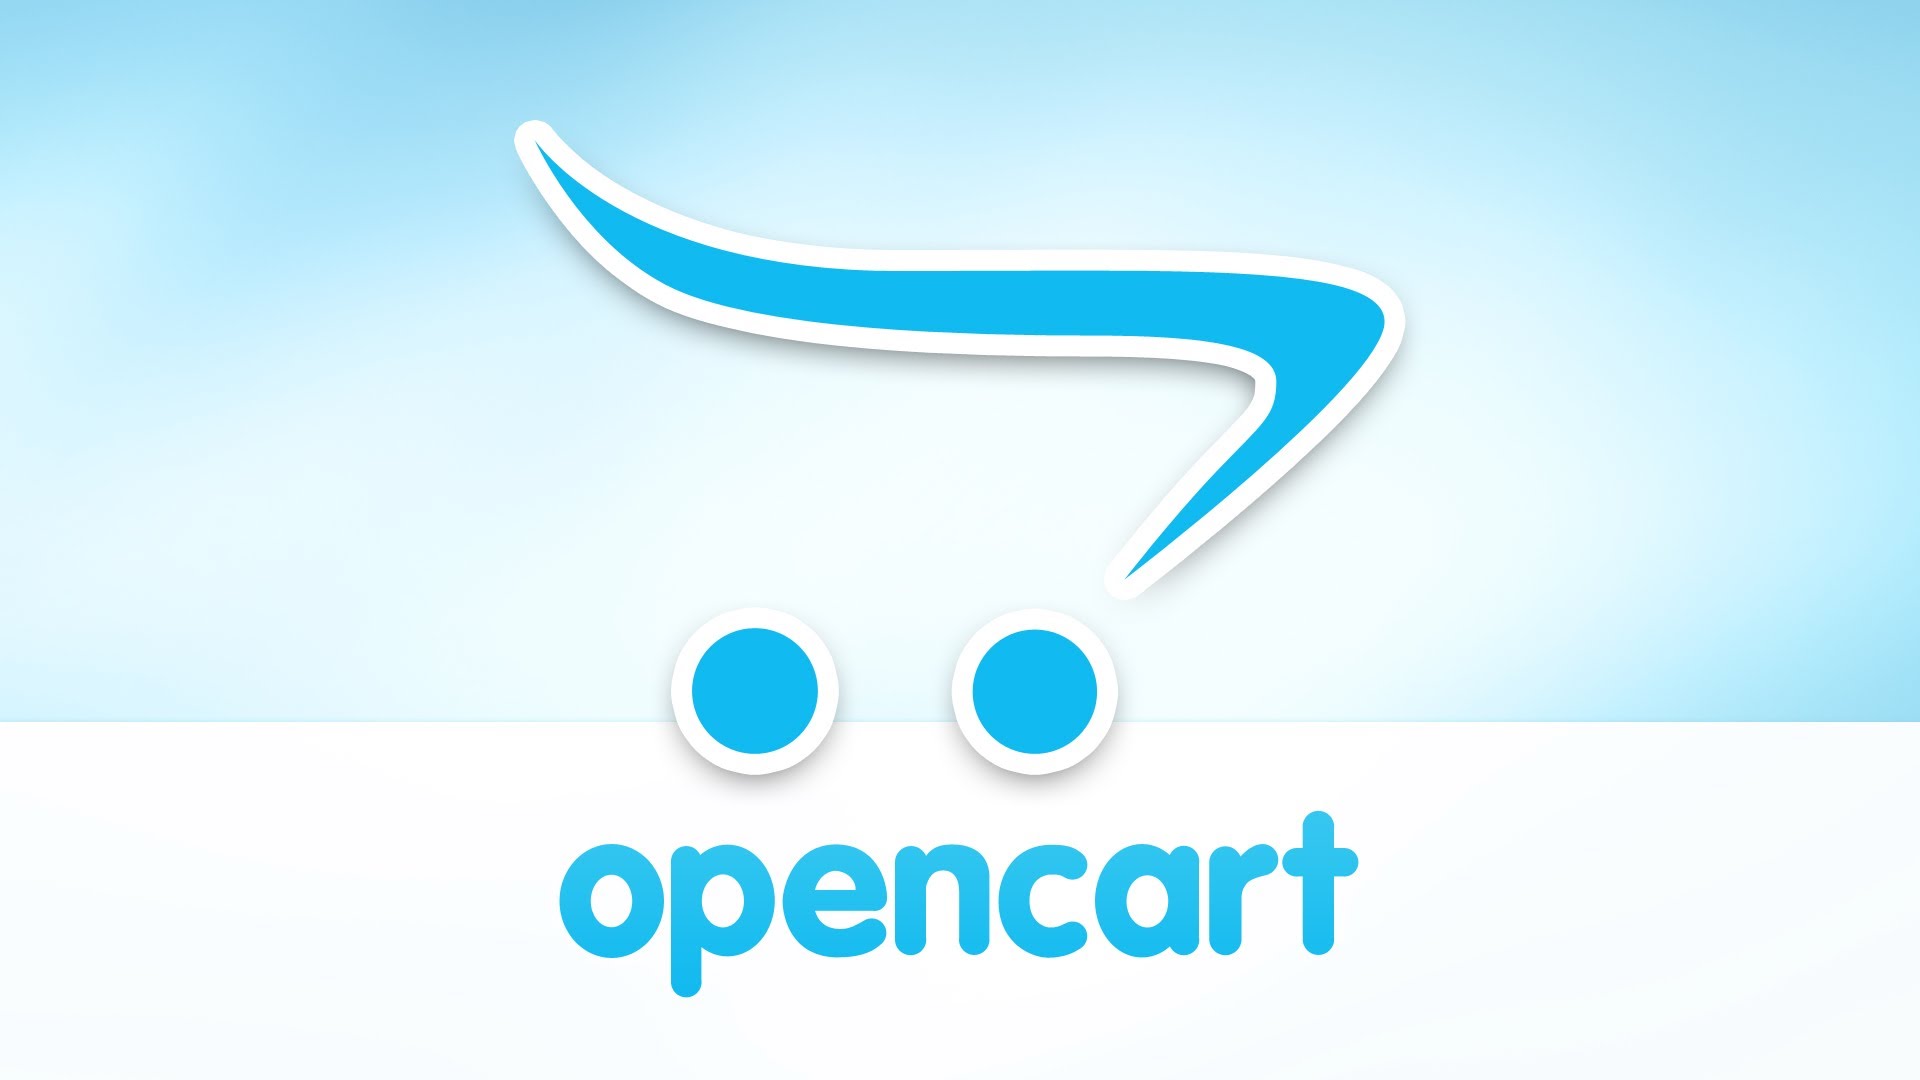 Opencart nedir?